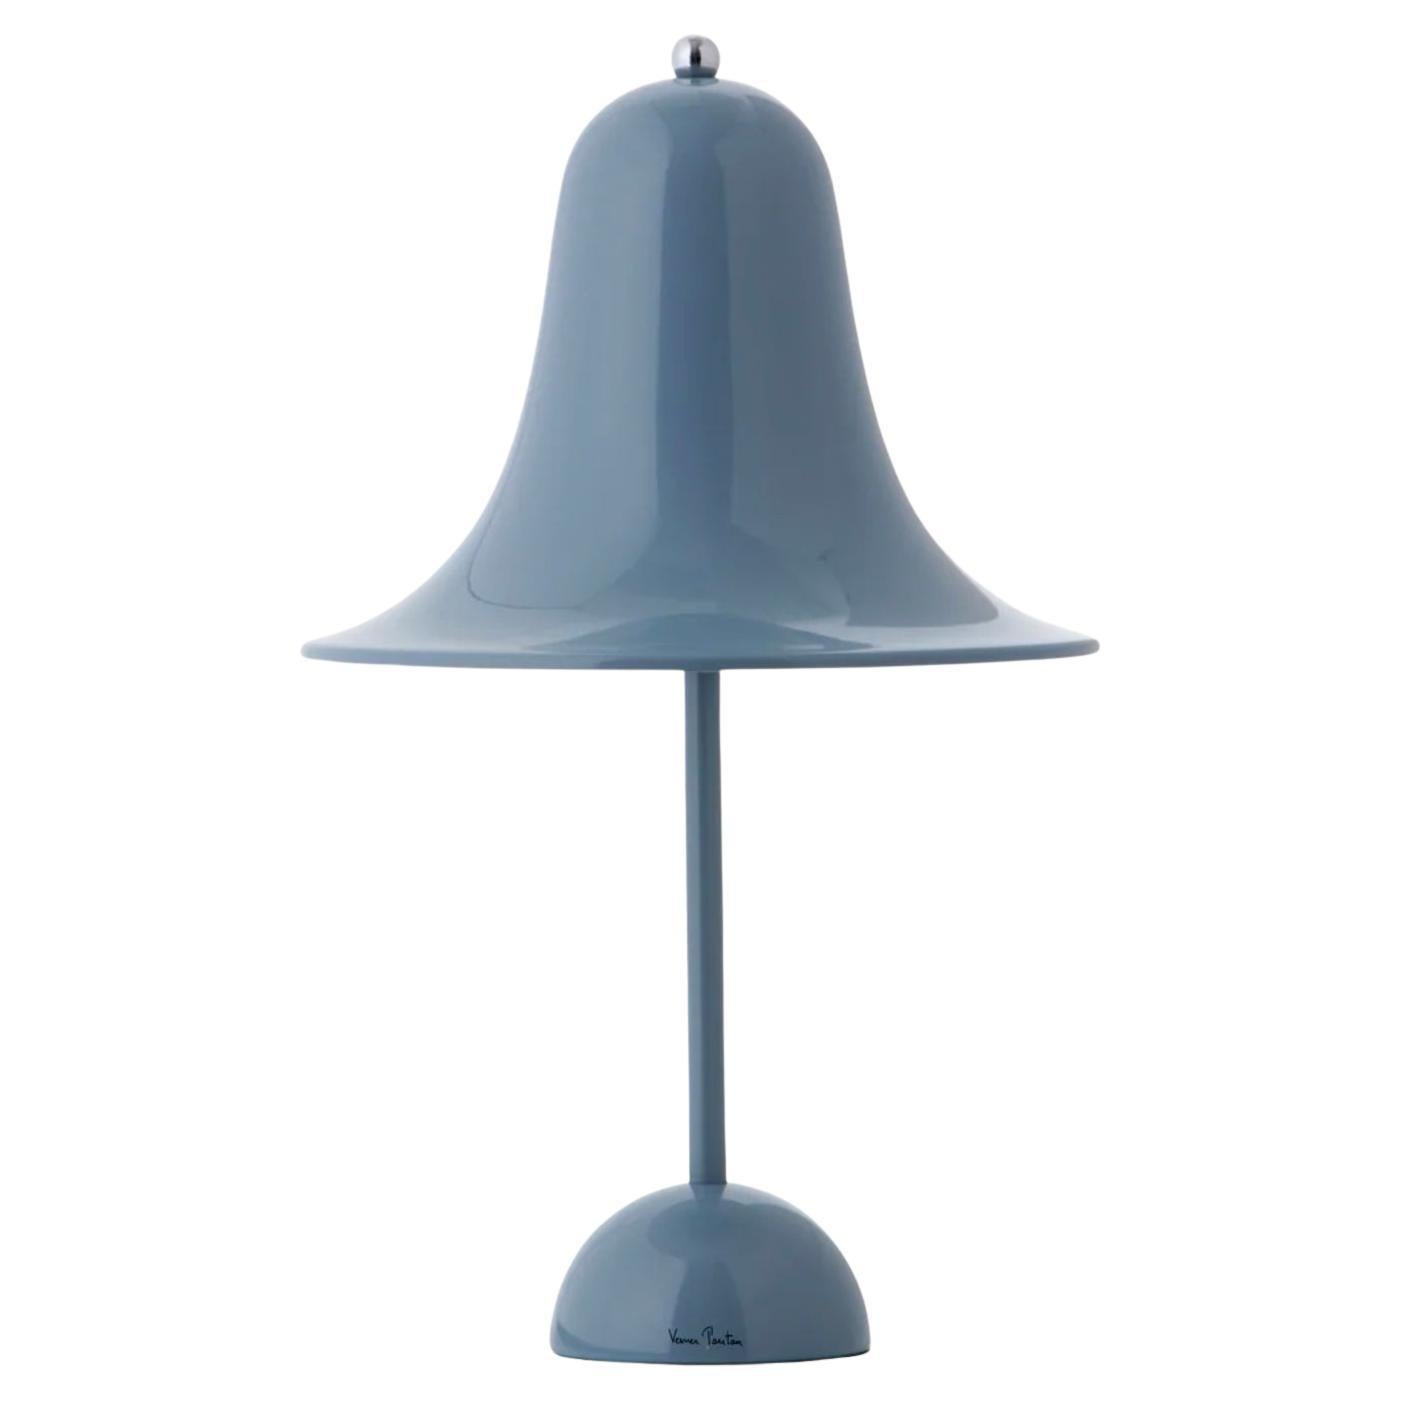 Verner Panton 'Pantop' Table Lamp in 'Dusty Blue' 1980 for Verpan